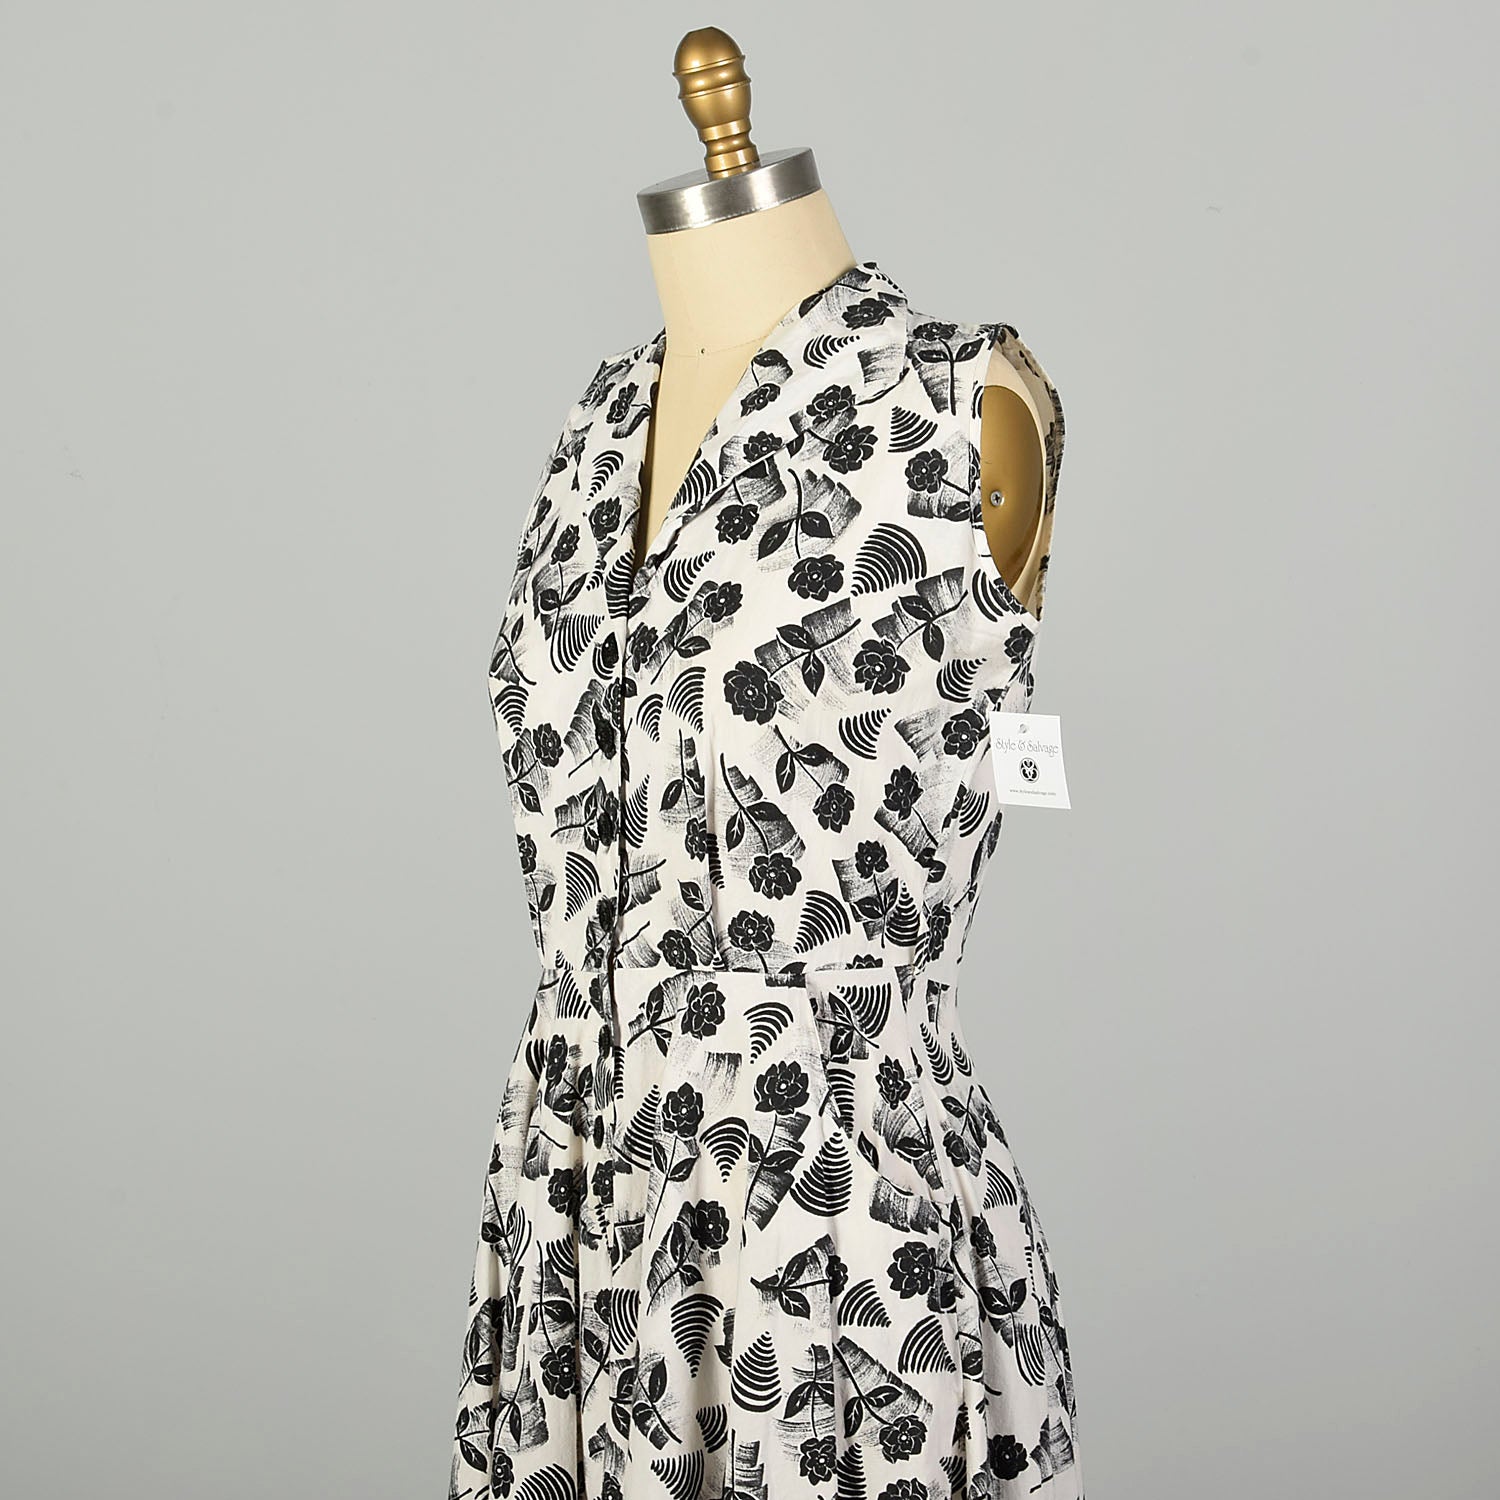 Medium 1950s Day Dress Black Novelty Print Sleeveless Cotton Summer Circle Skirt